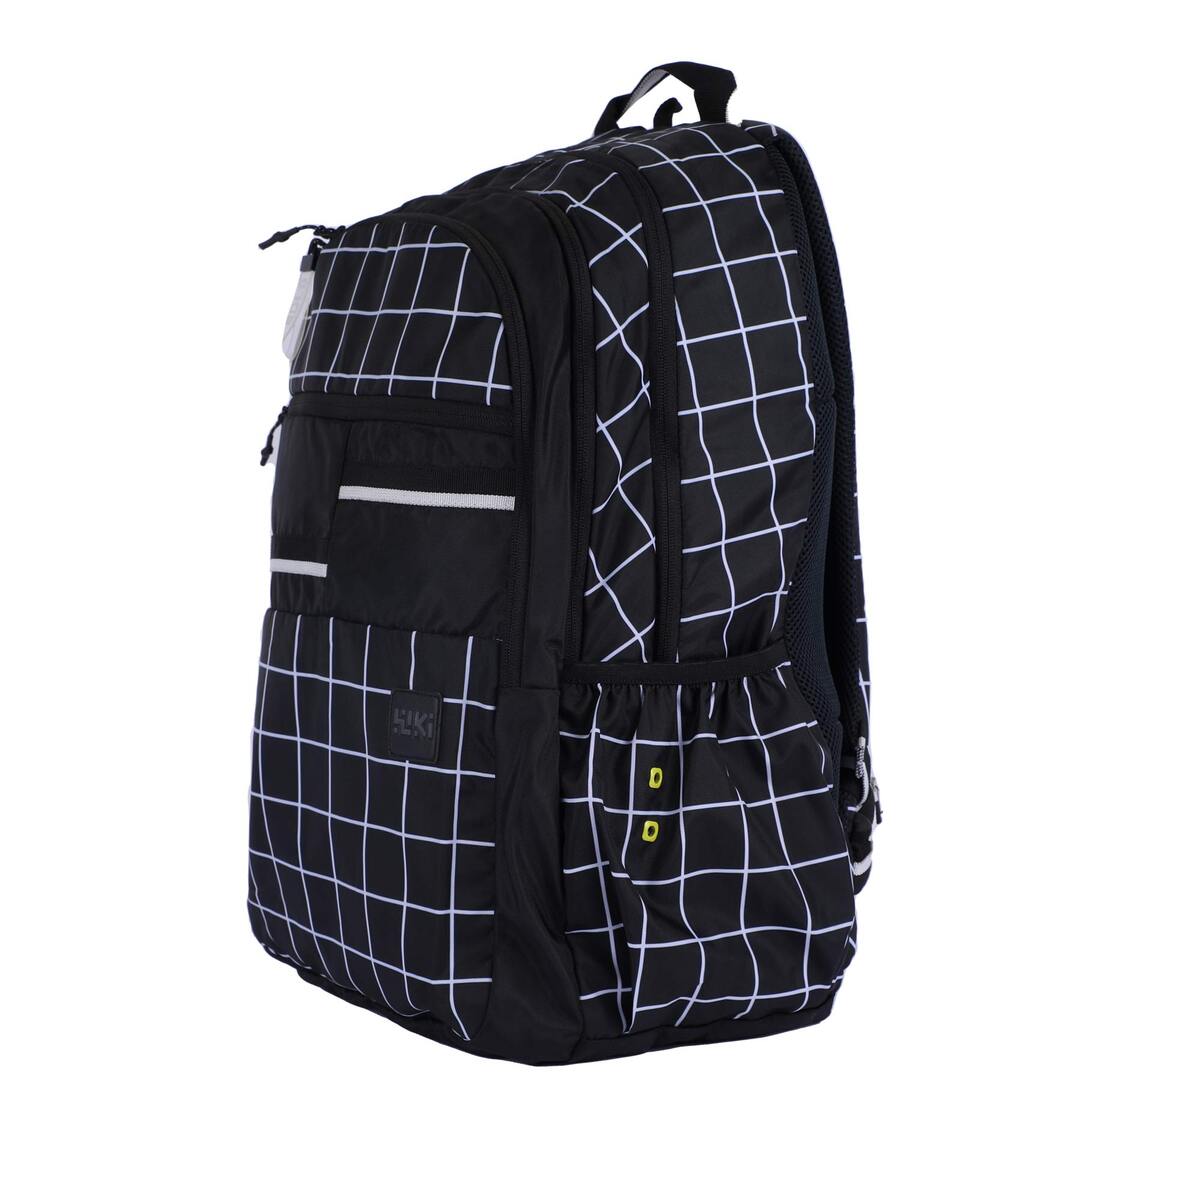 Wildcraft School Backpack 4Checks 19.5inch,Black